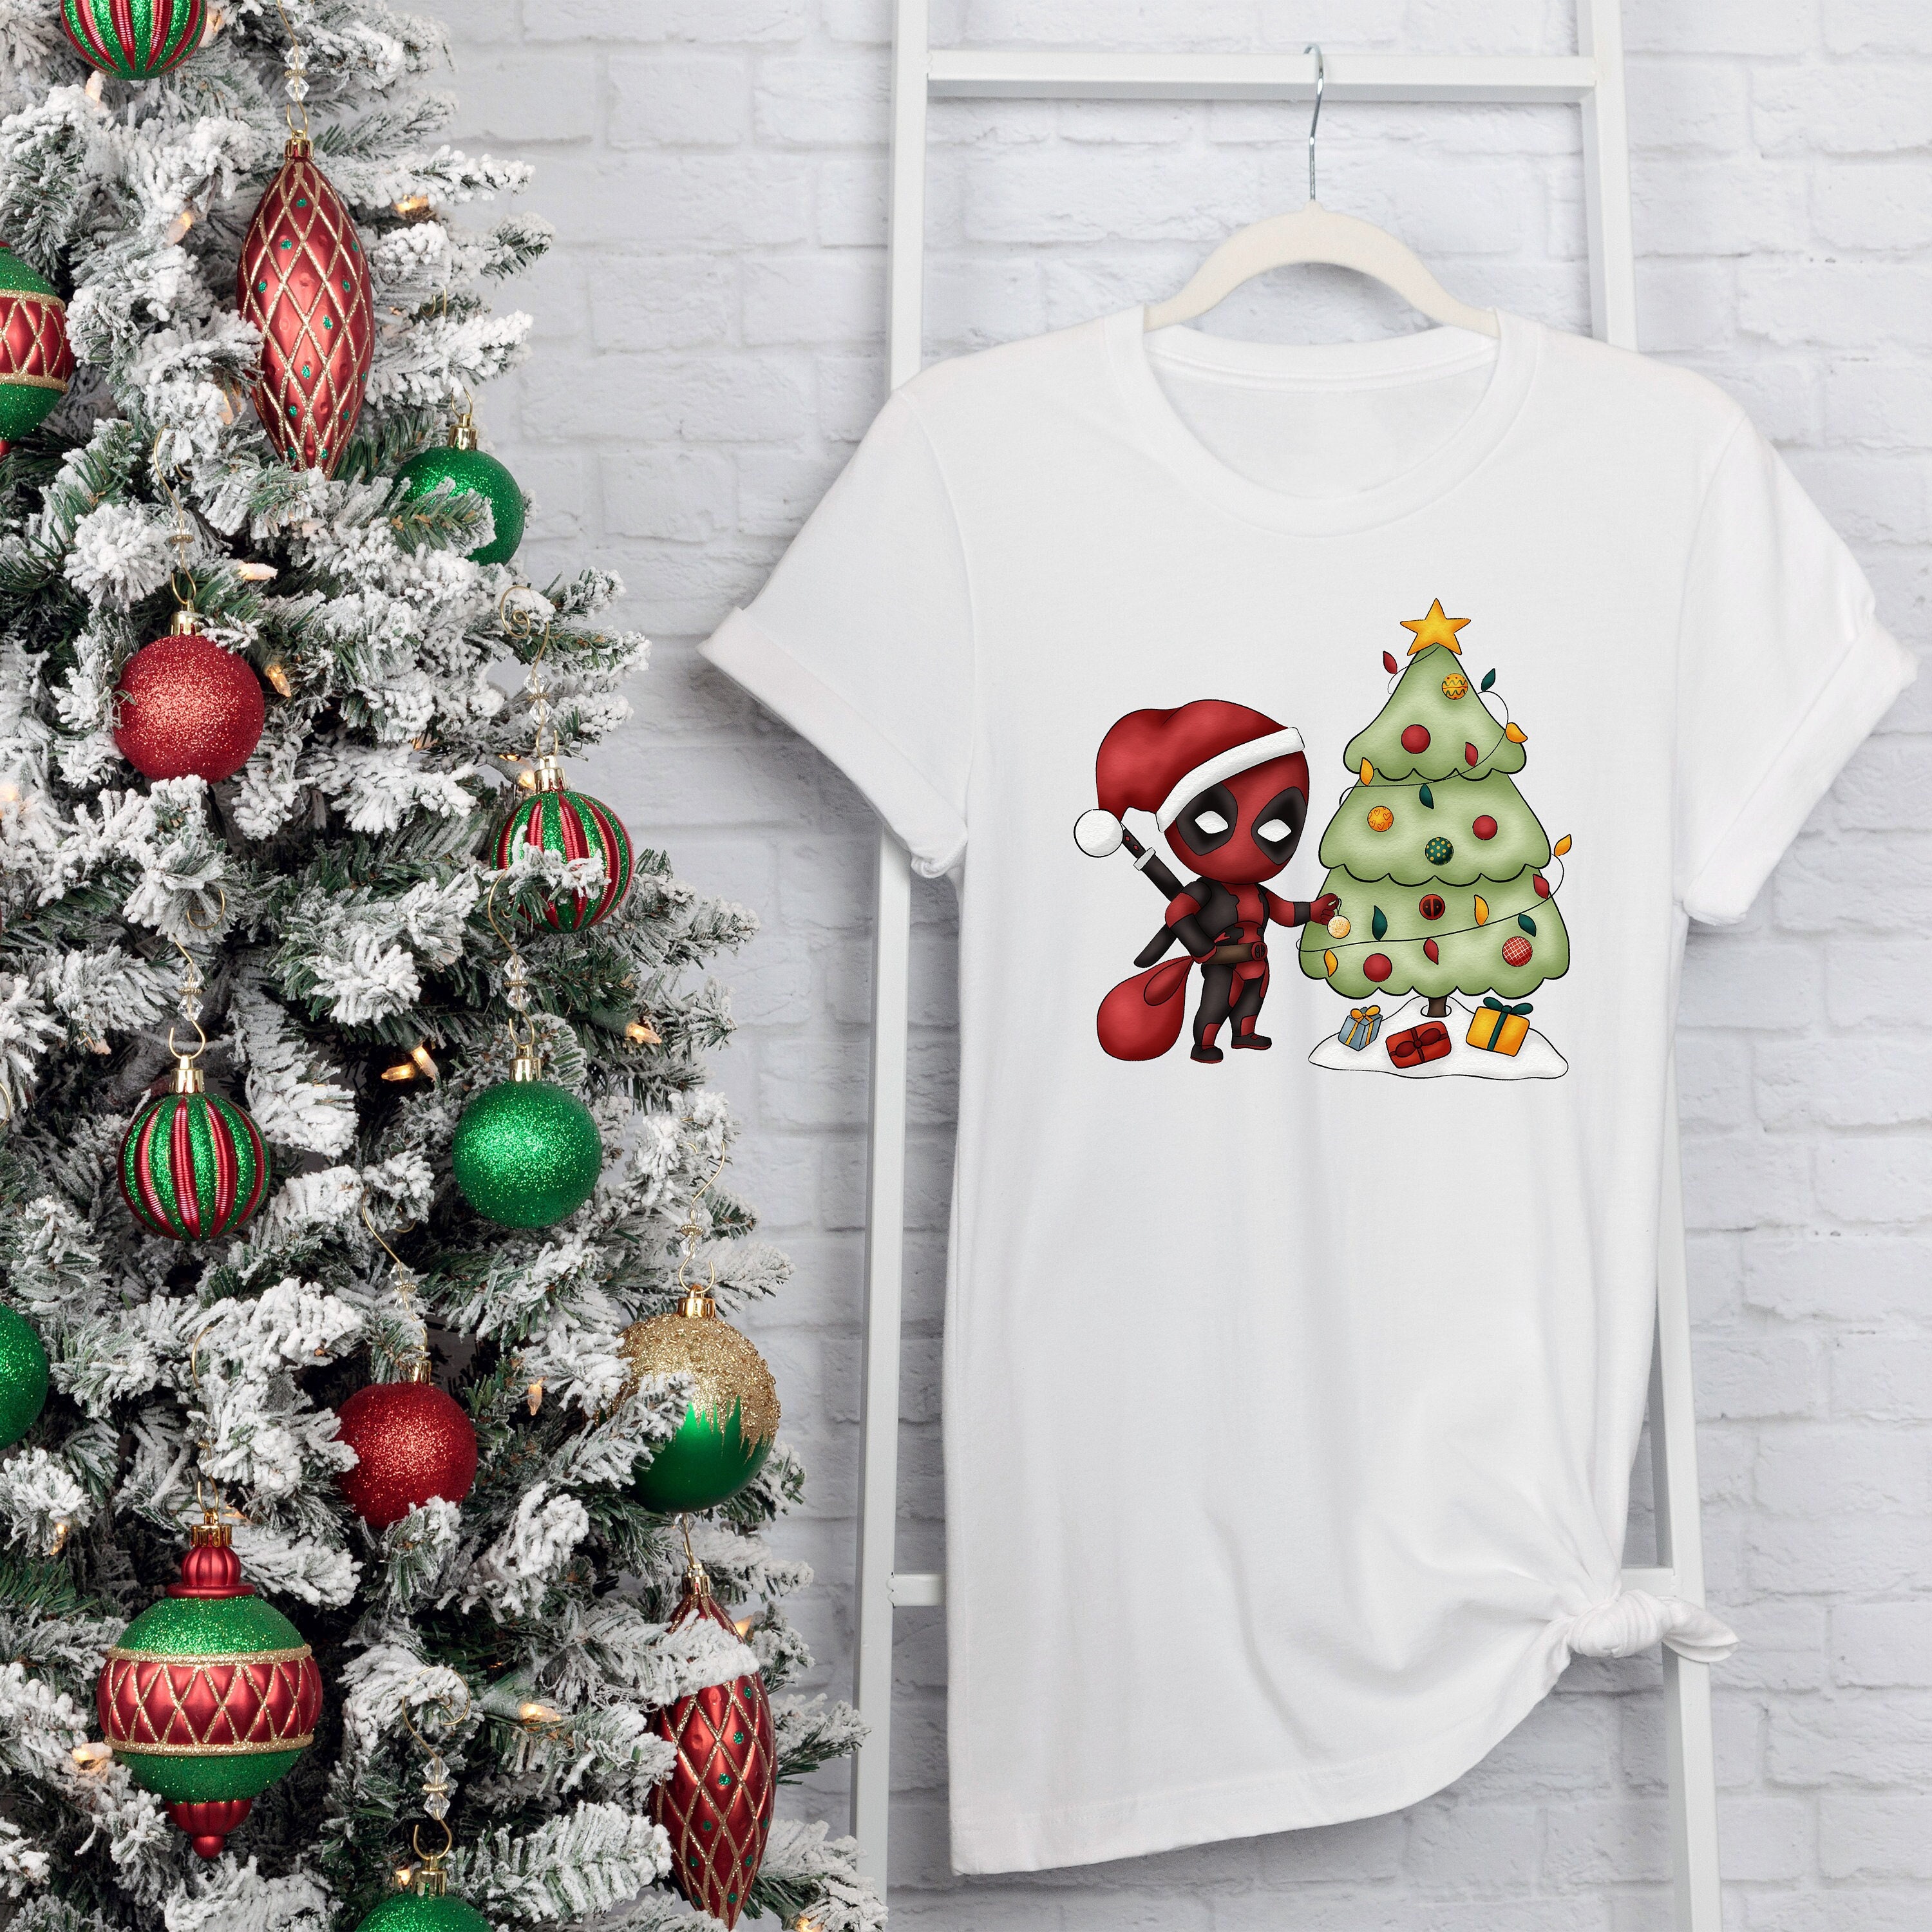 Discover Deadpool Christmas Tree Shirt, Funny Deadpool Shirt, Deadpool Christmas Tree Decorating